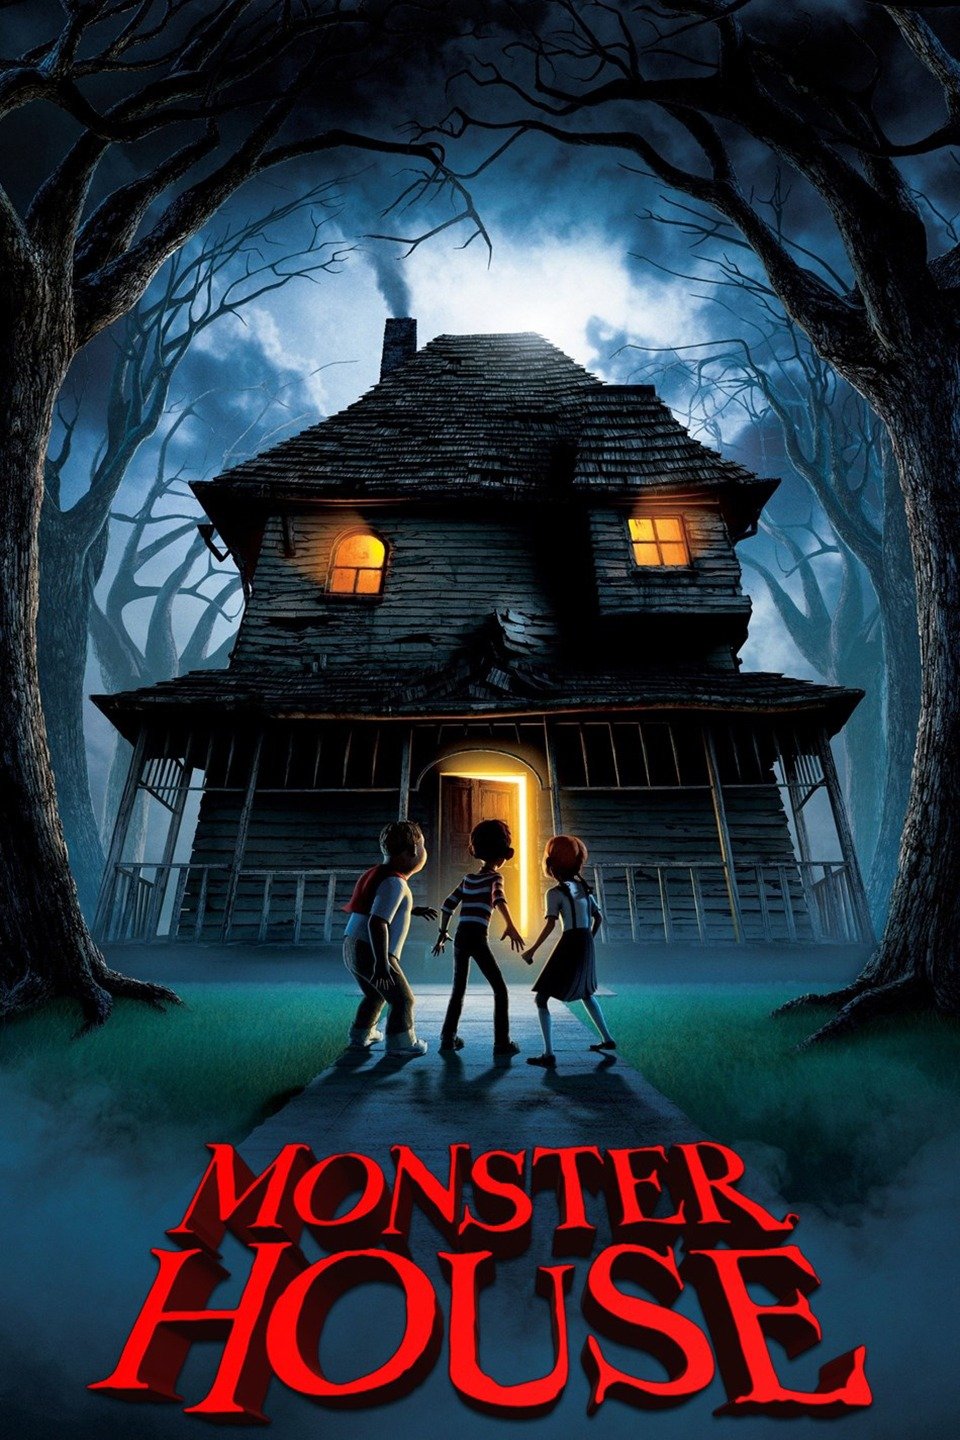 [MINI-HD] Monster House (2006) บ้านผีสิง [720p] [พากย์ไทย 5.1 + เสียงอังกฤษ 5.1] [บรรยายไทย + อังกฤษ] [เสียงไทย + ซับไทย] [OPENLOAD]